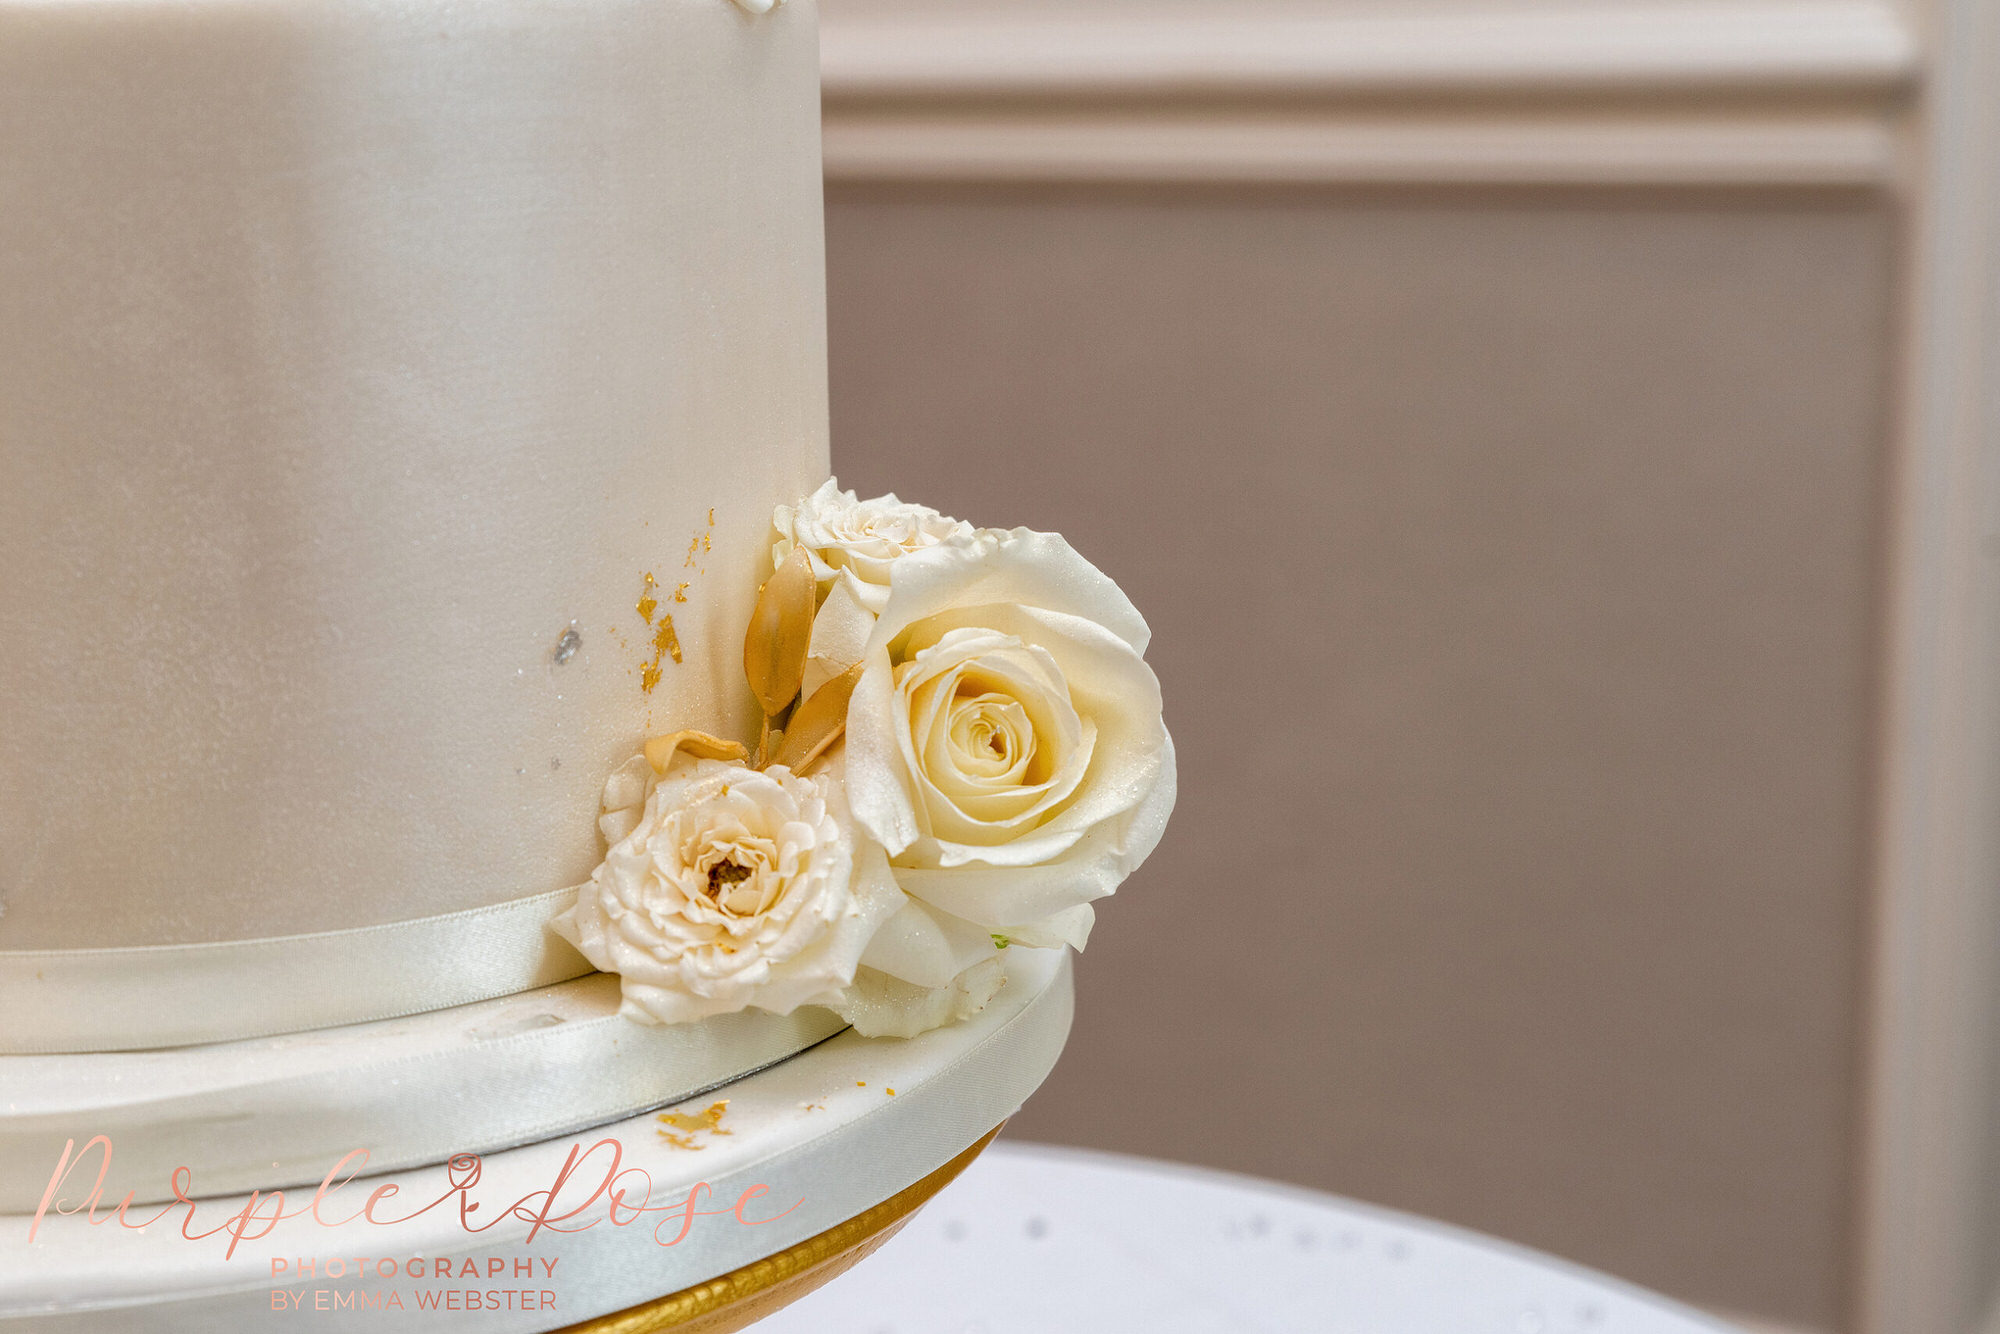 Flowers on a wedding cake